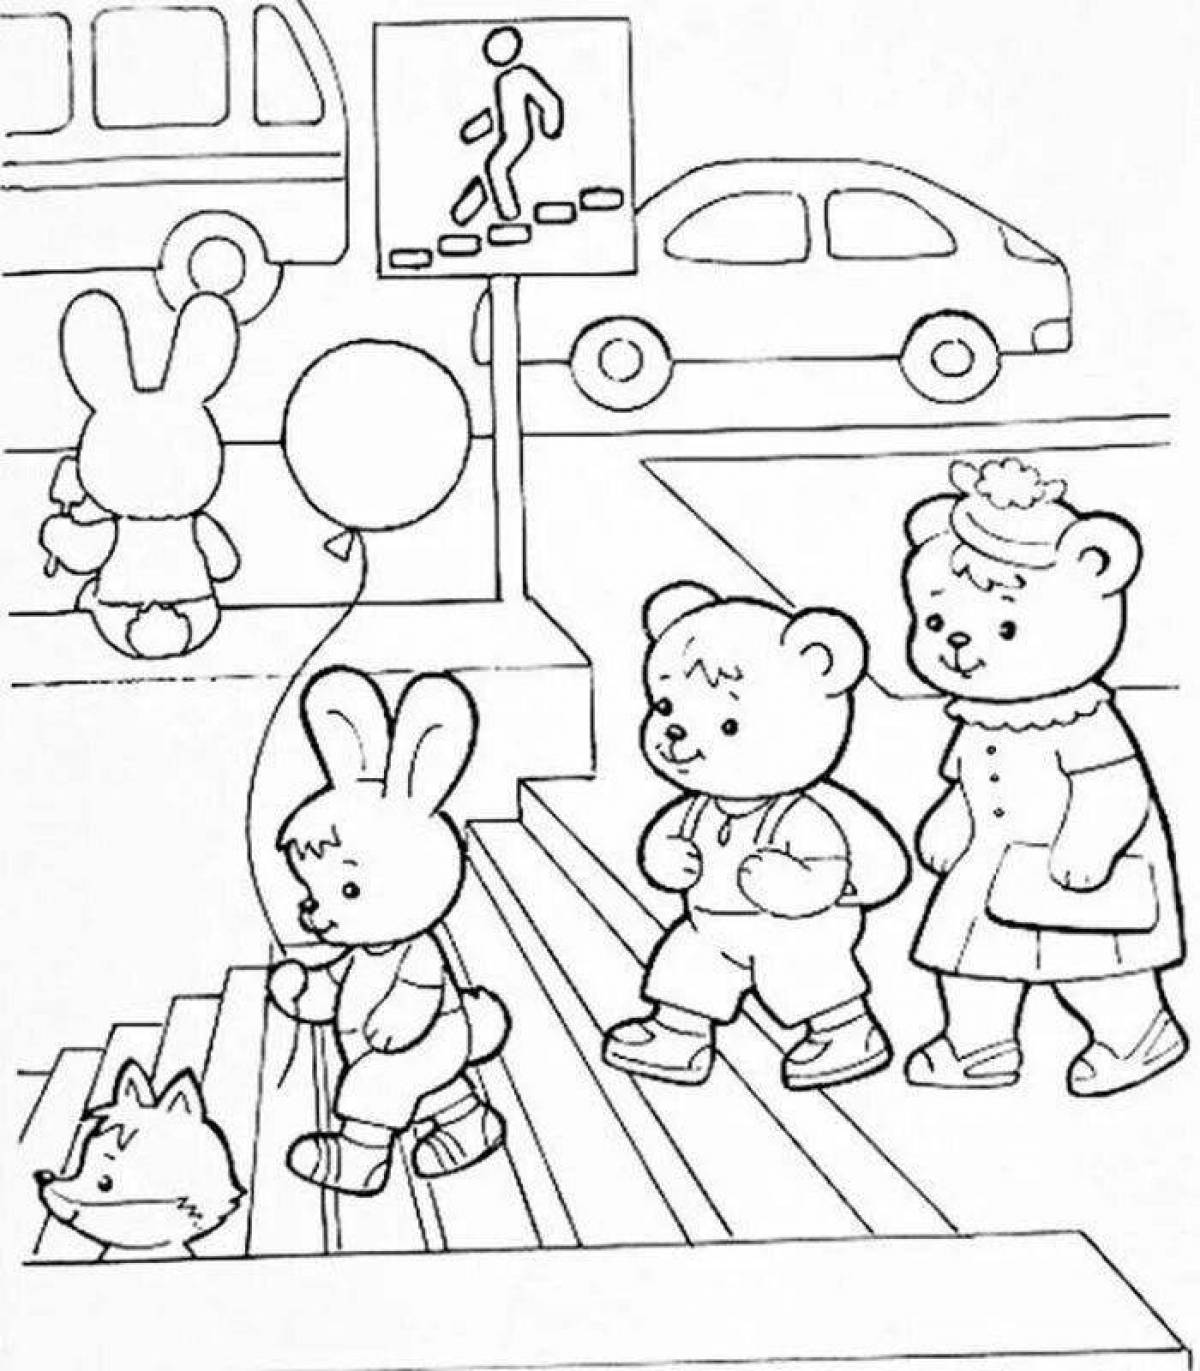 1st grade humorous traffic rules coloring book